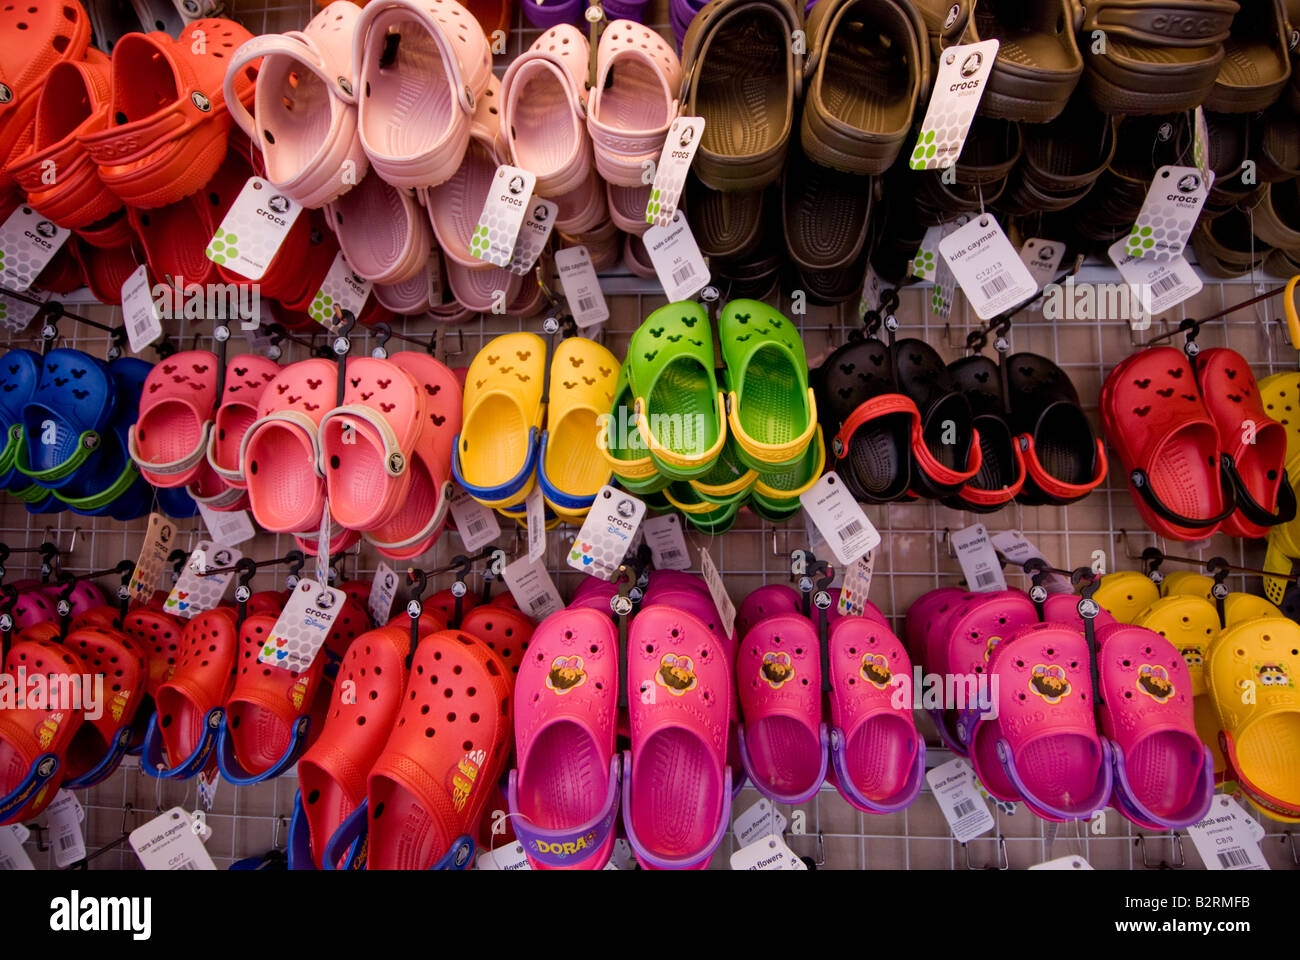 Colourful Croc sandals, Holland Village, Singapore Stock Photo - Alamy